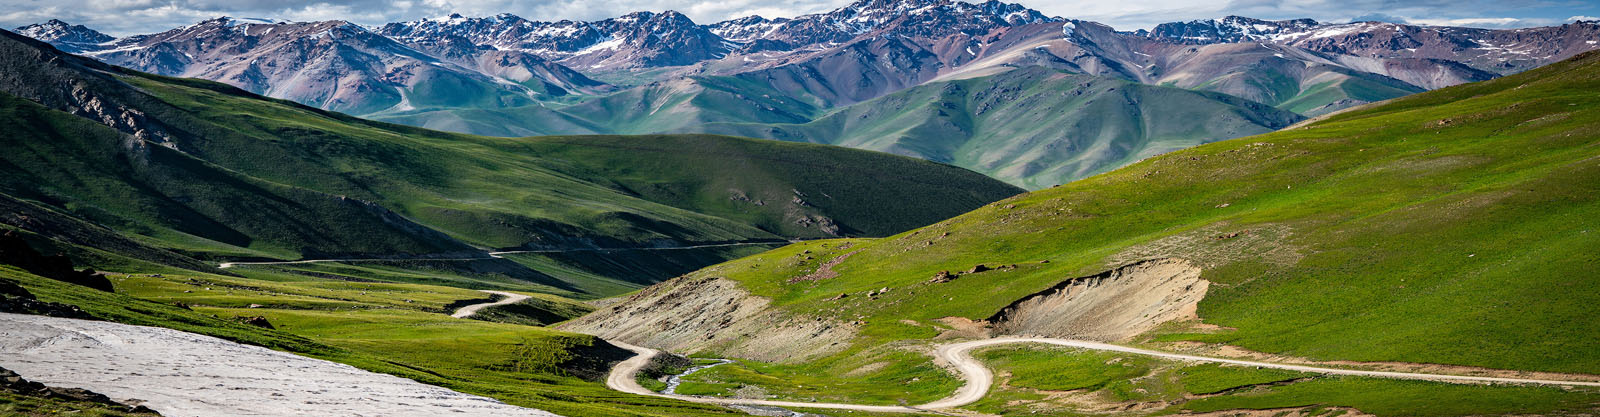 kyrgyzstan-silk-road-banner